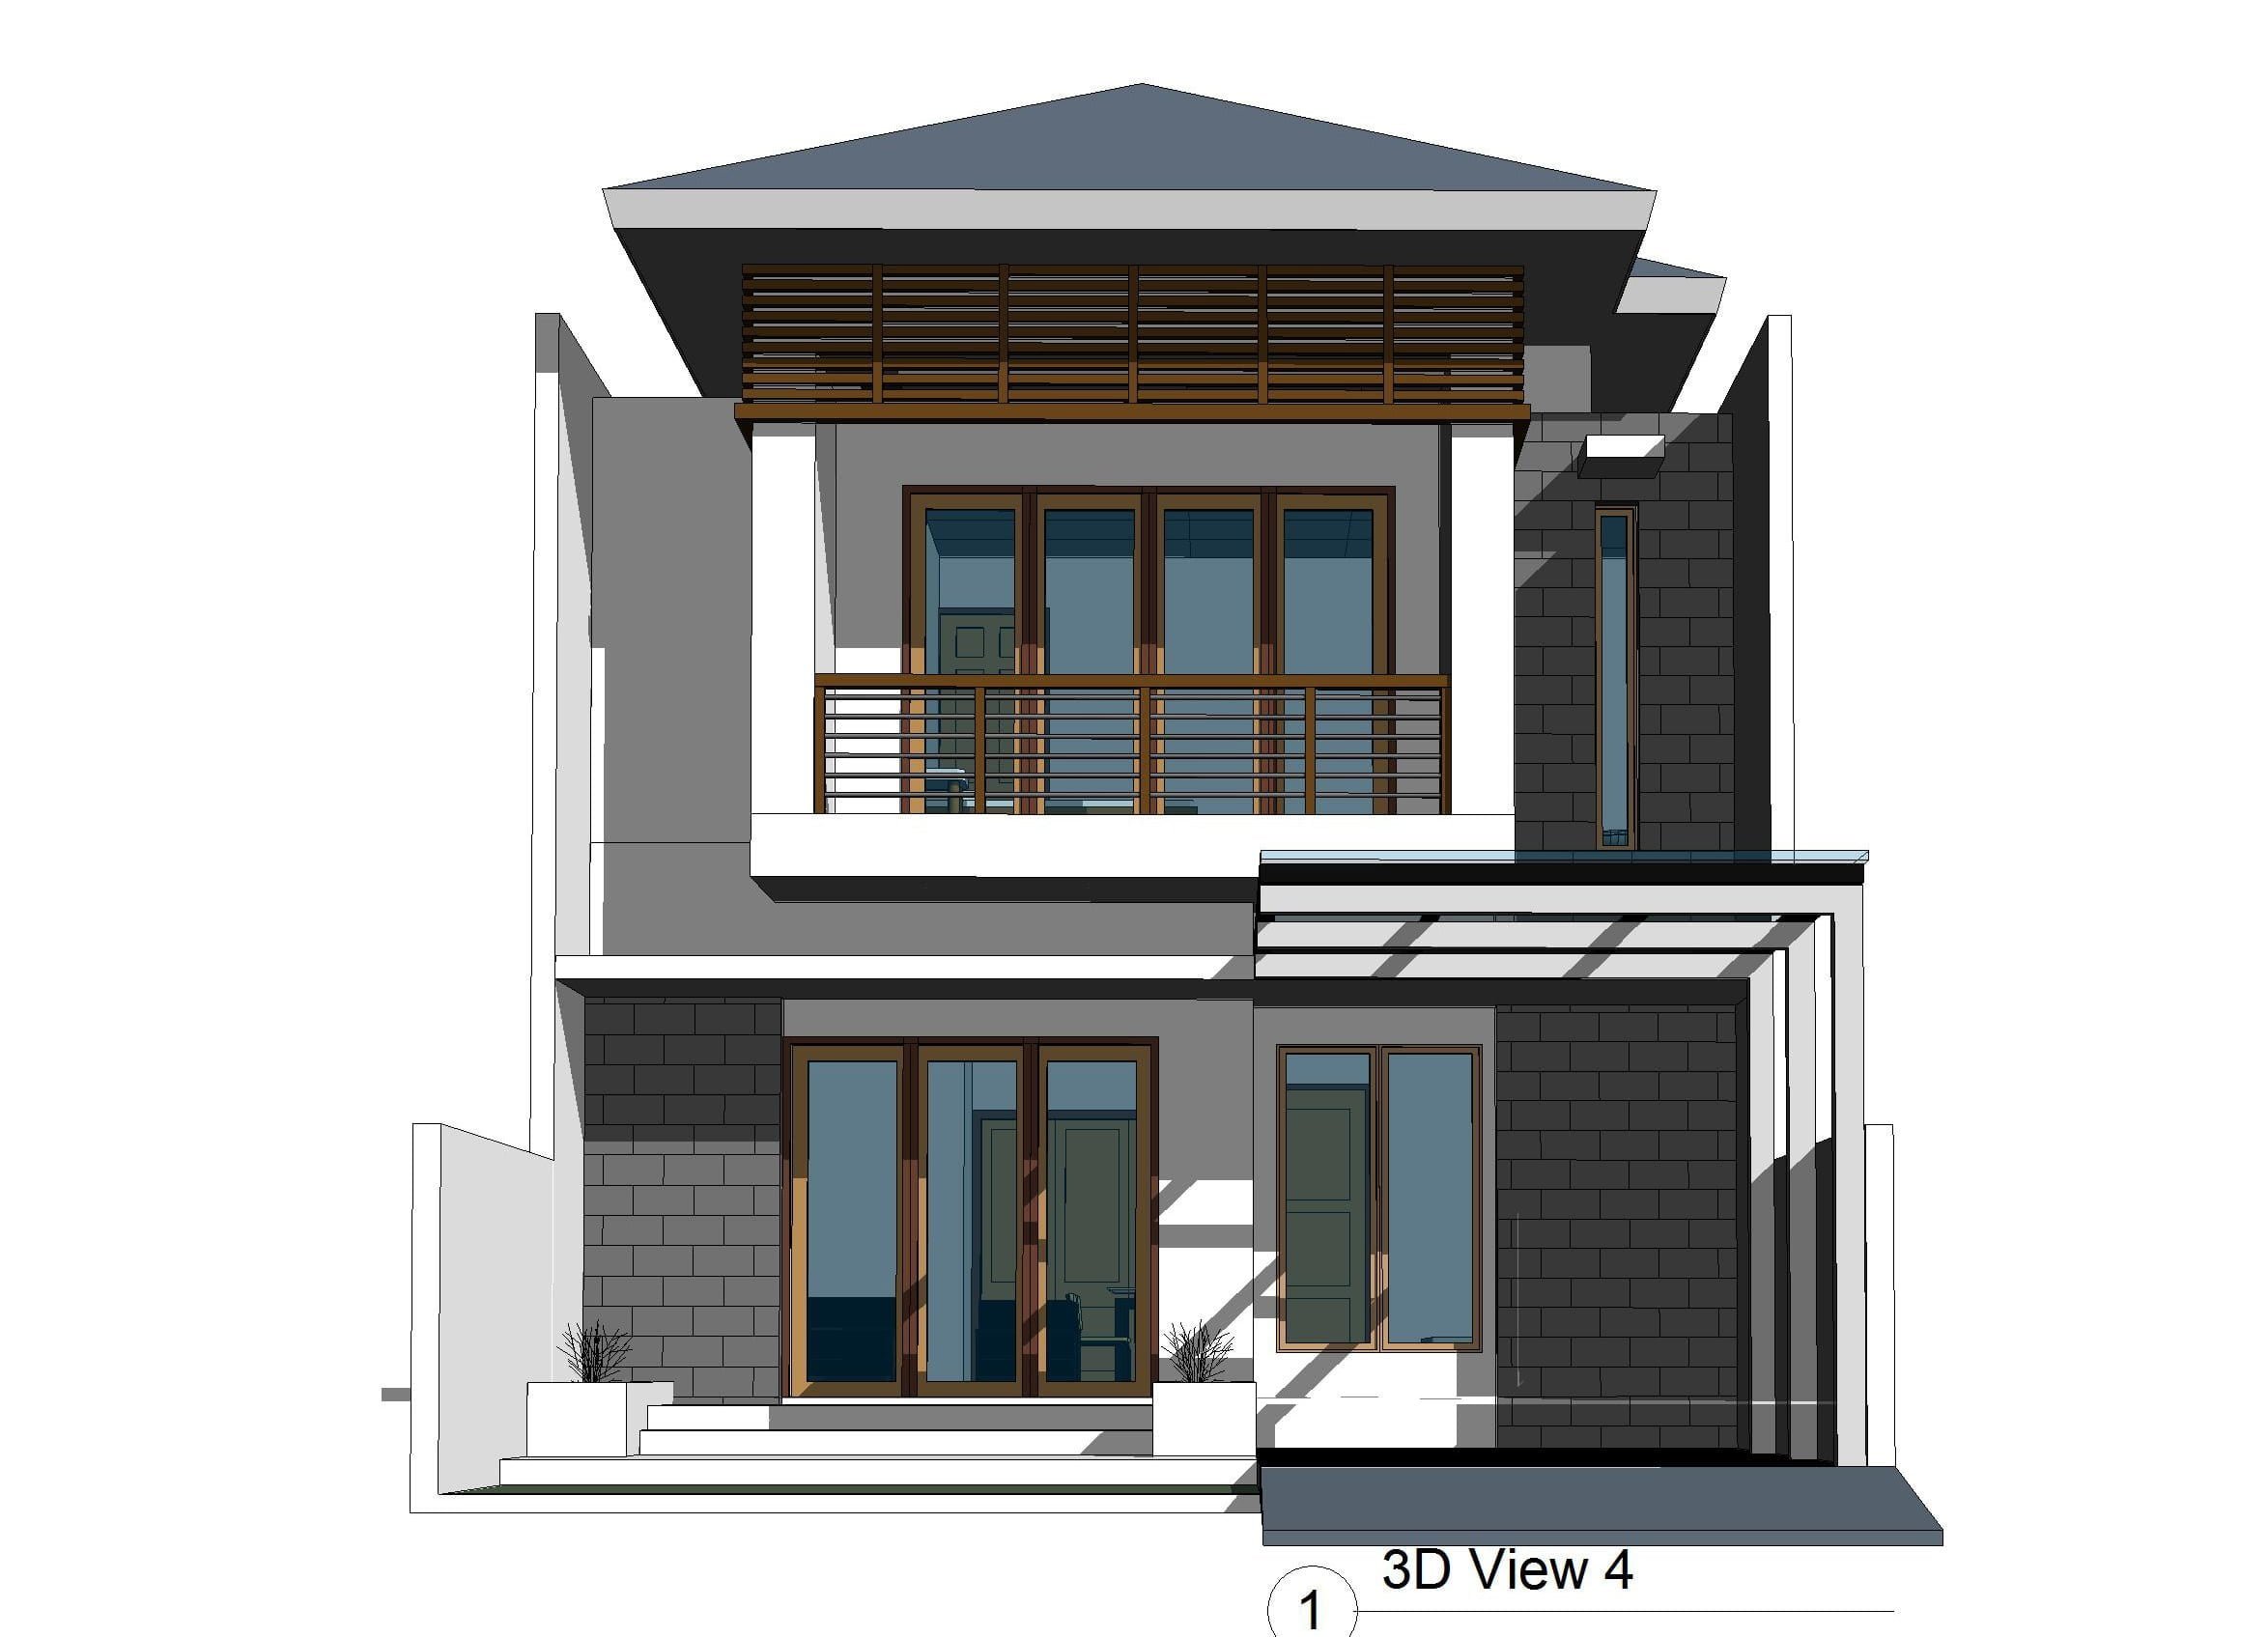 66 Contoh Desain Rumah Modern Minimalis 2 Lantai Luas Tanah 120m2